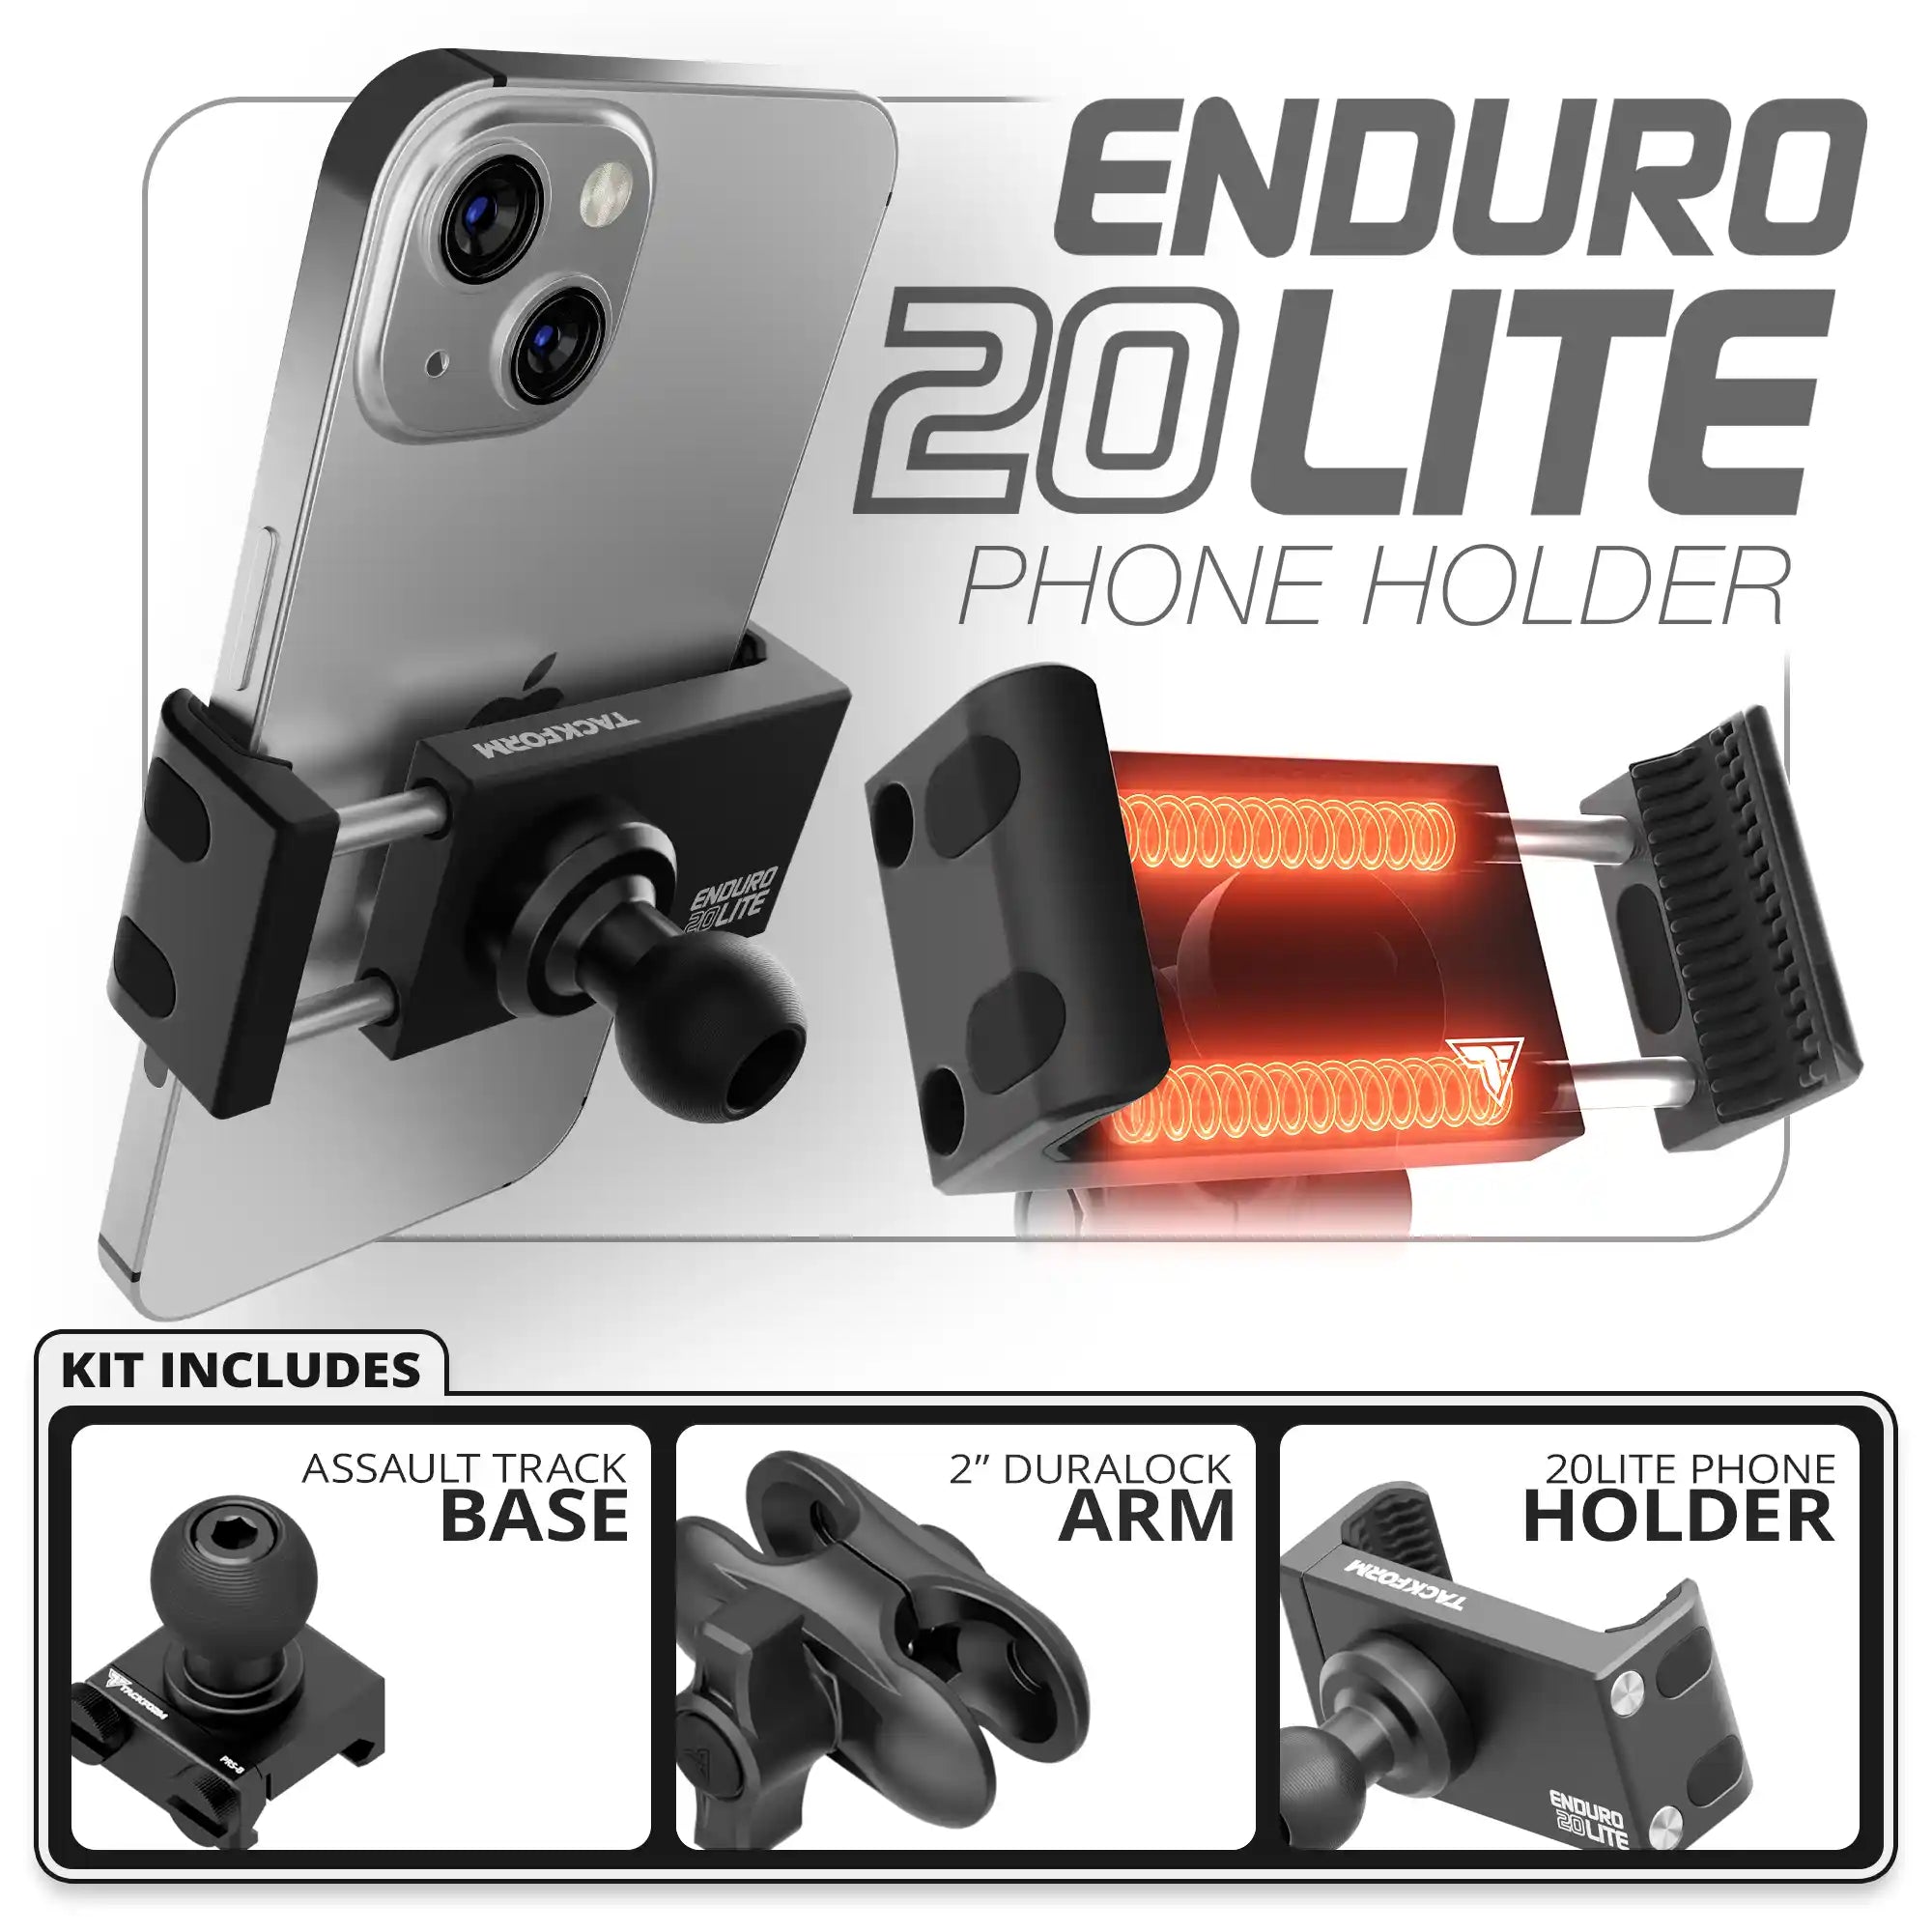 20LITE Phone Holder | Assault Track Base | 2" DuraLock Arm